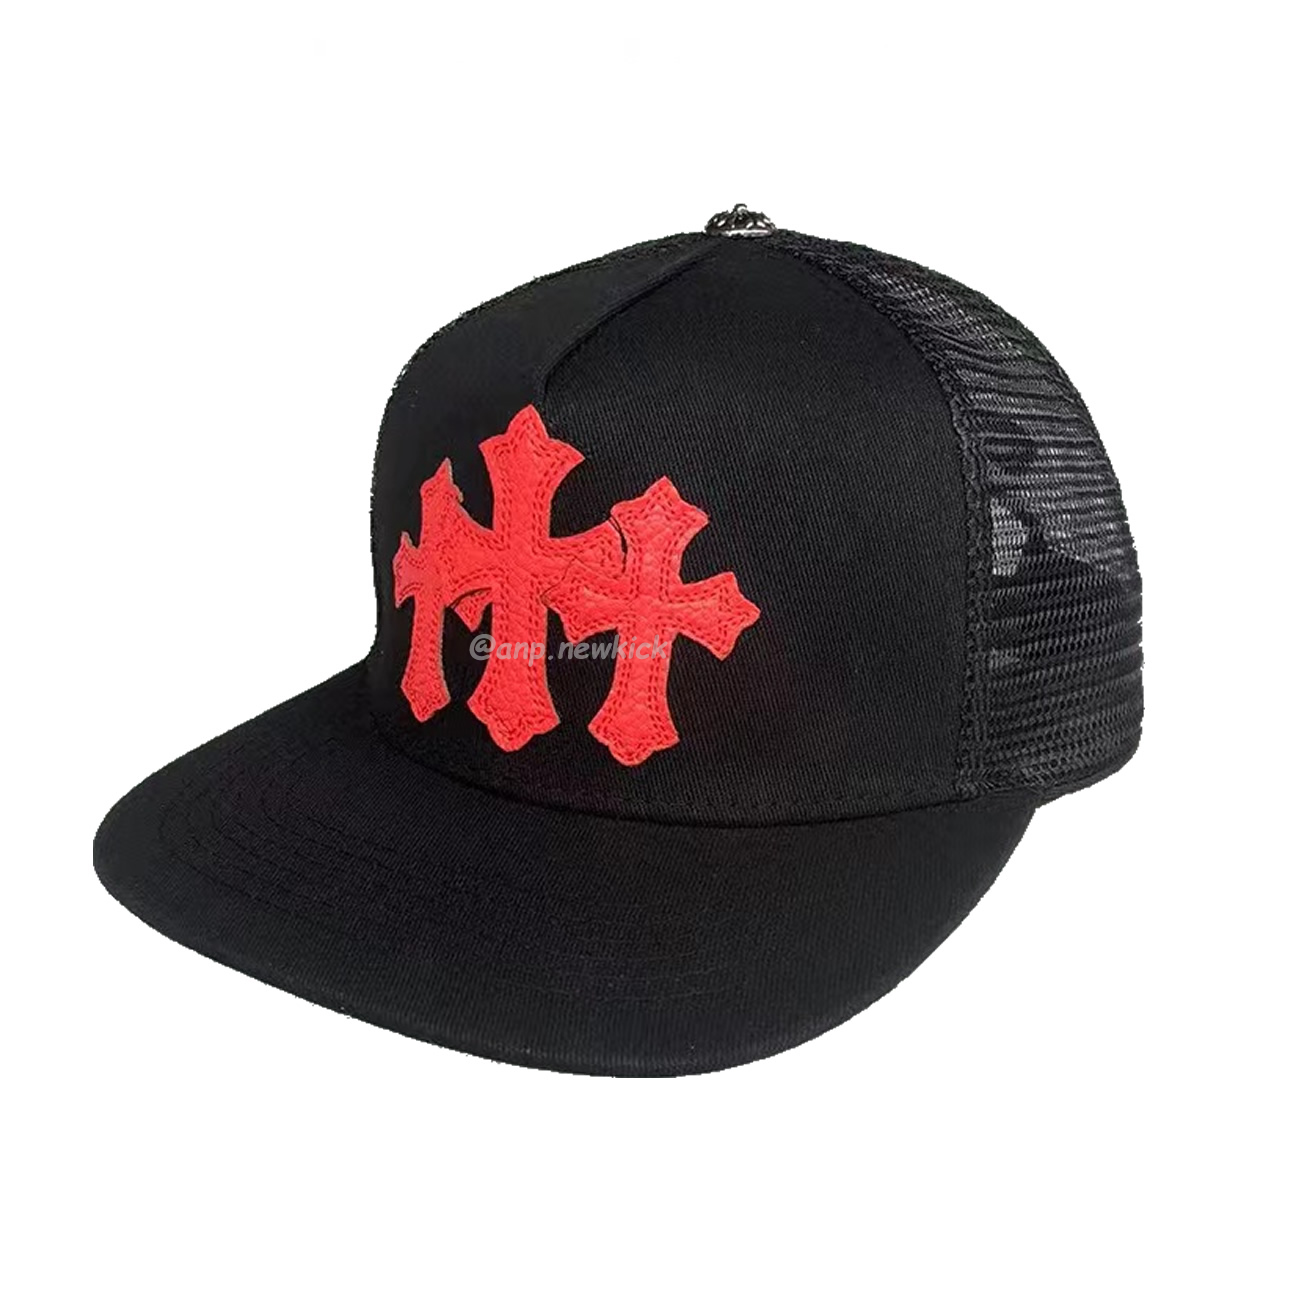 Chrome Hearts Tri Cross Black White Red Trucker Hat (8) - newkick.org